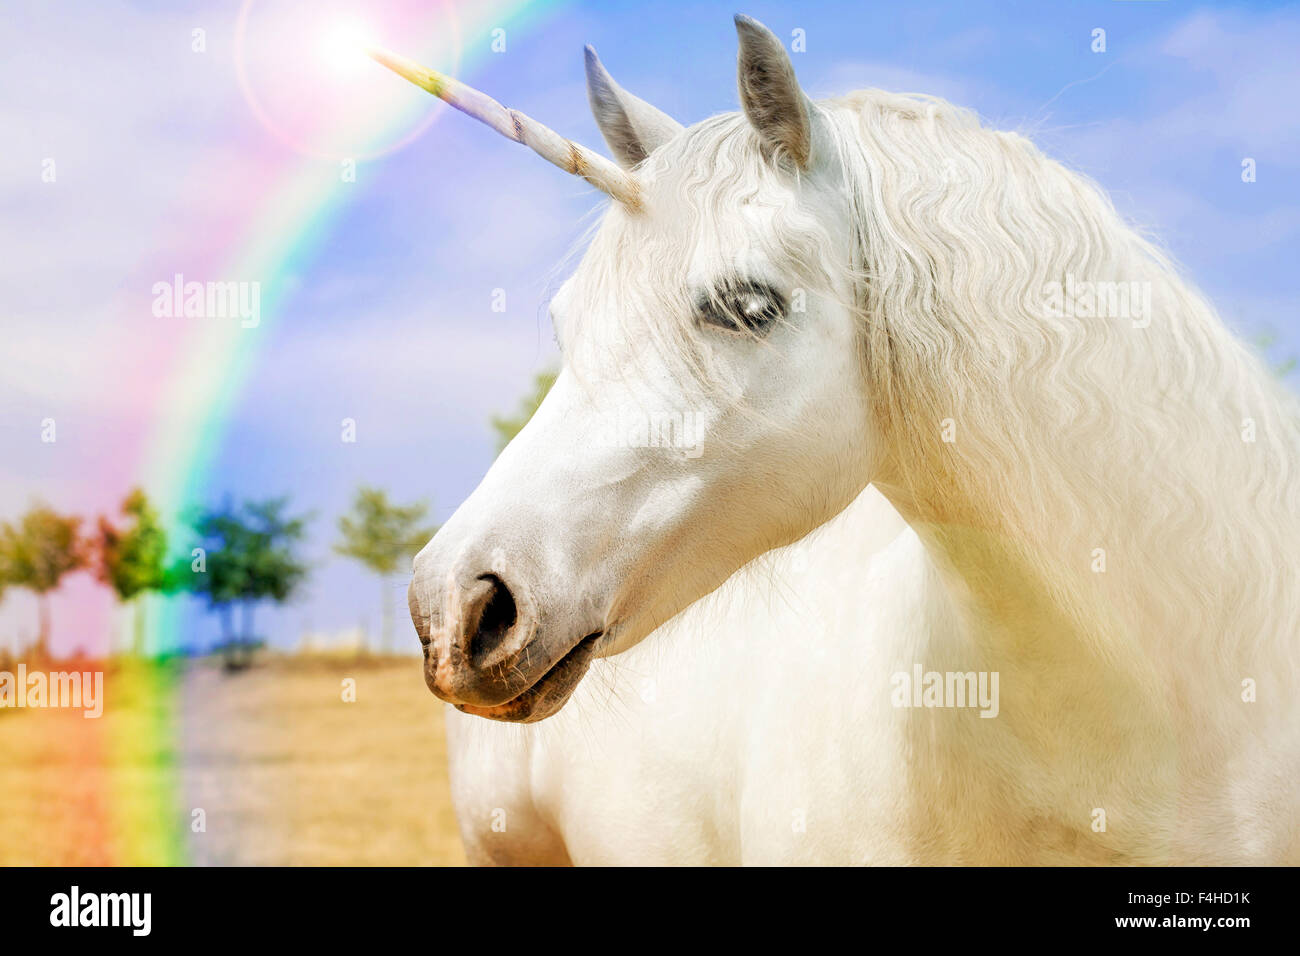 Realistic Unicorn digital photo Illustration Stock Photo - Alamy